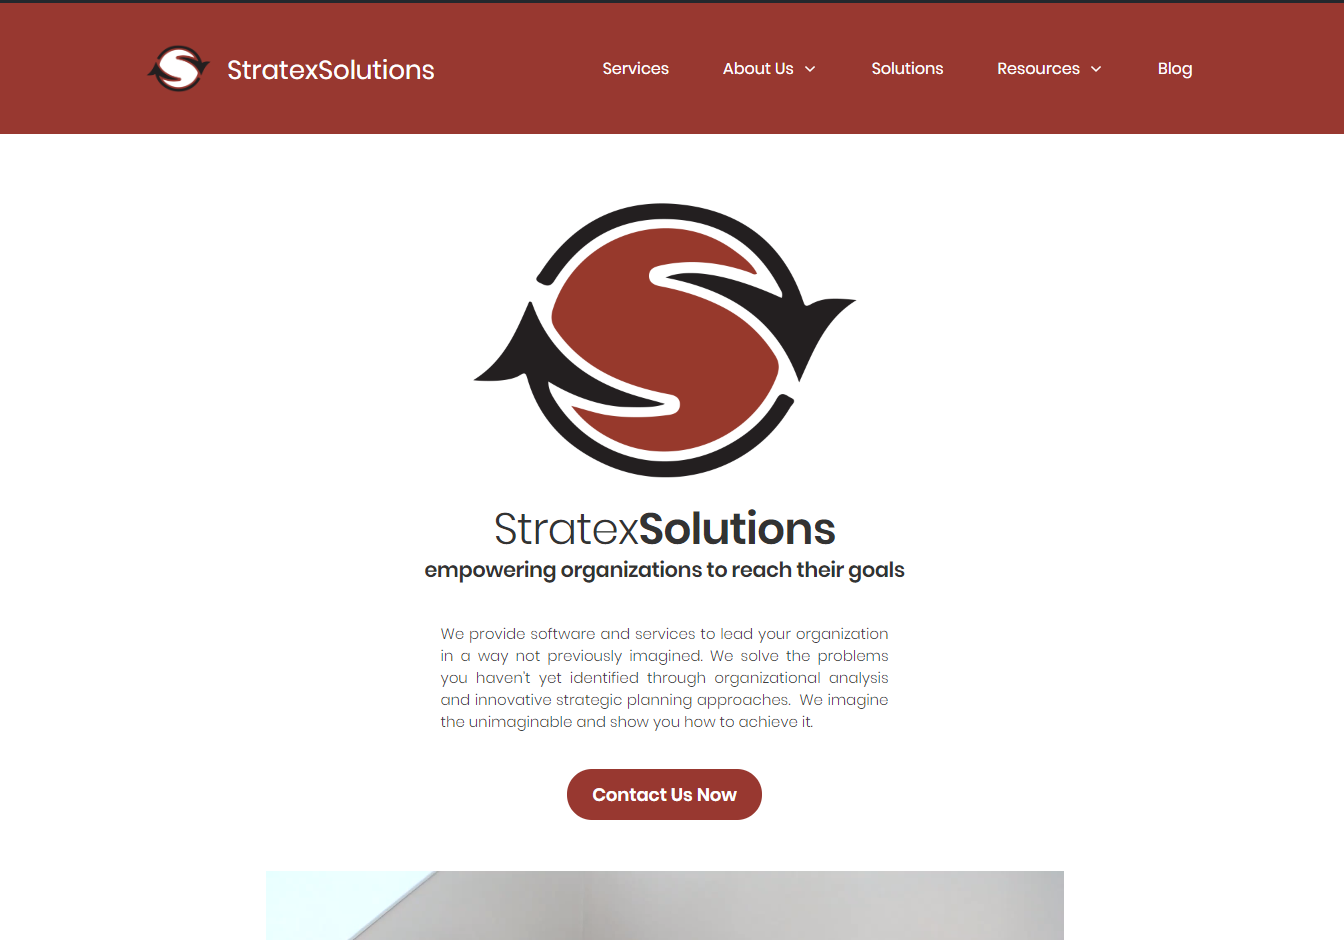 Stratex Solutions DCA White Label Website Development